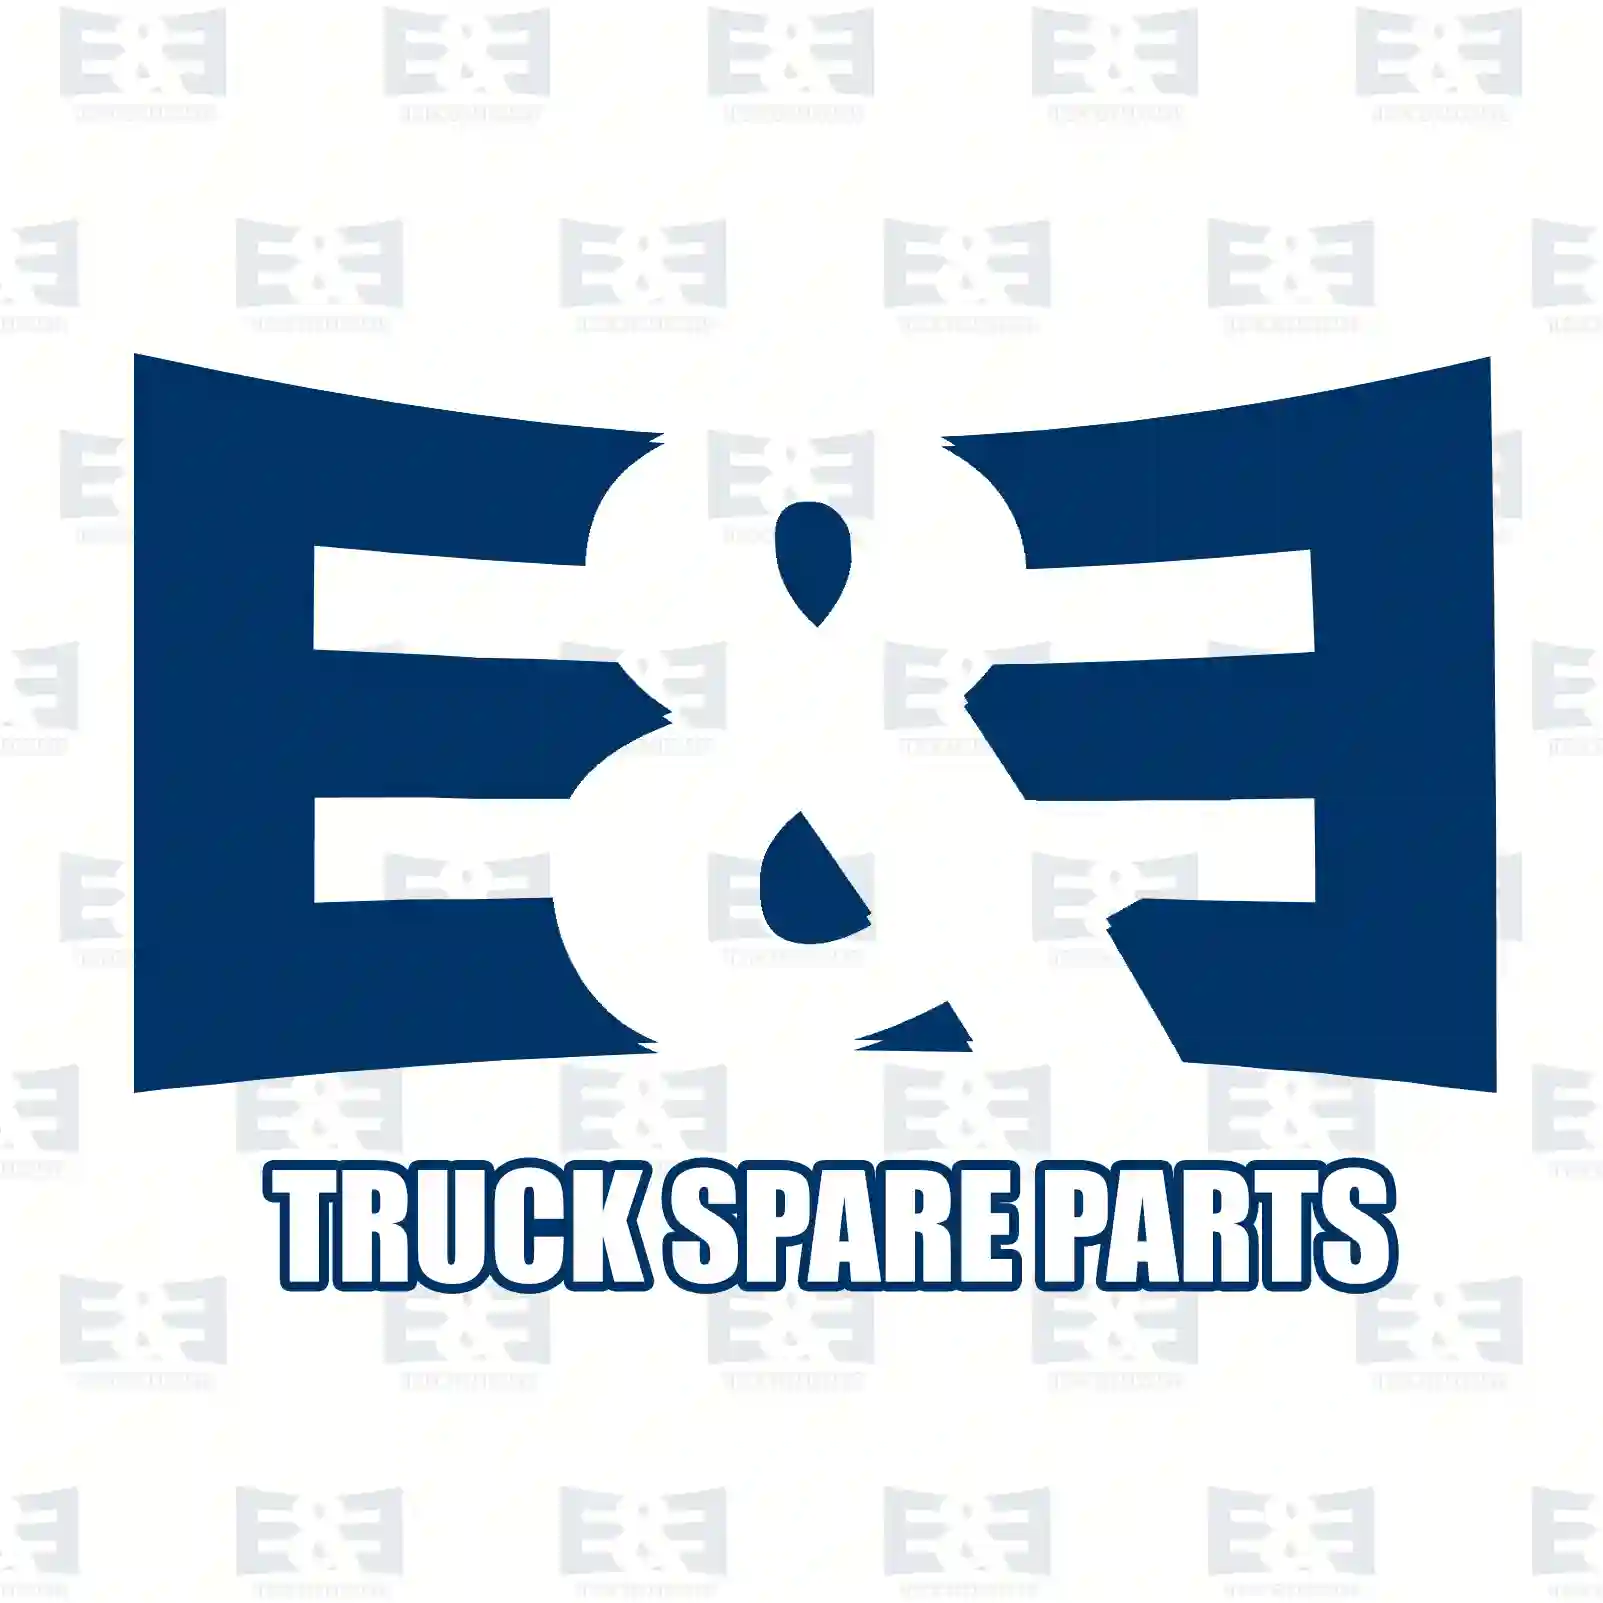 V-belt kit, 2E2285849, 0039971292, 0039976792, 0049977292, 0089979792 ||  2E2285849 E&E Truck Spare Parts | Truck Spare Parts, Auotomotive Spare Parts V-belt kit, 2E2285849, 0039971292, 0039976792, 0049977292, 0089979792 ||  2E2285849 E&E Truck Spare Parts | Truck Spare Parts, Auotomotive Spare Parts